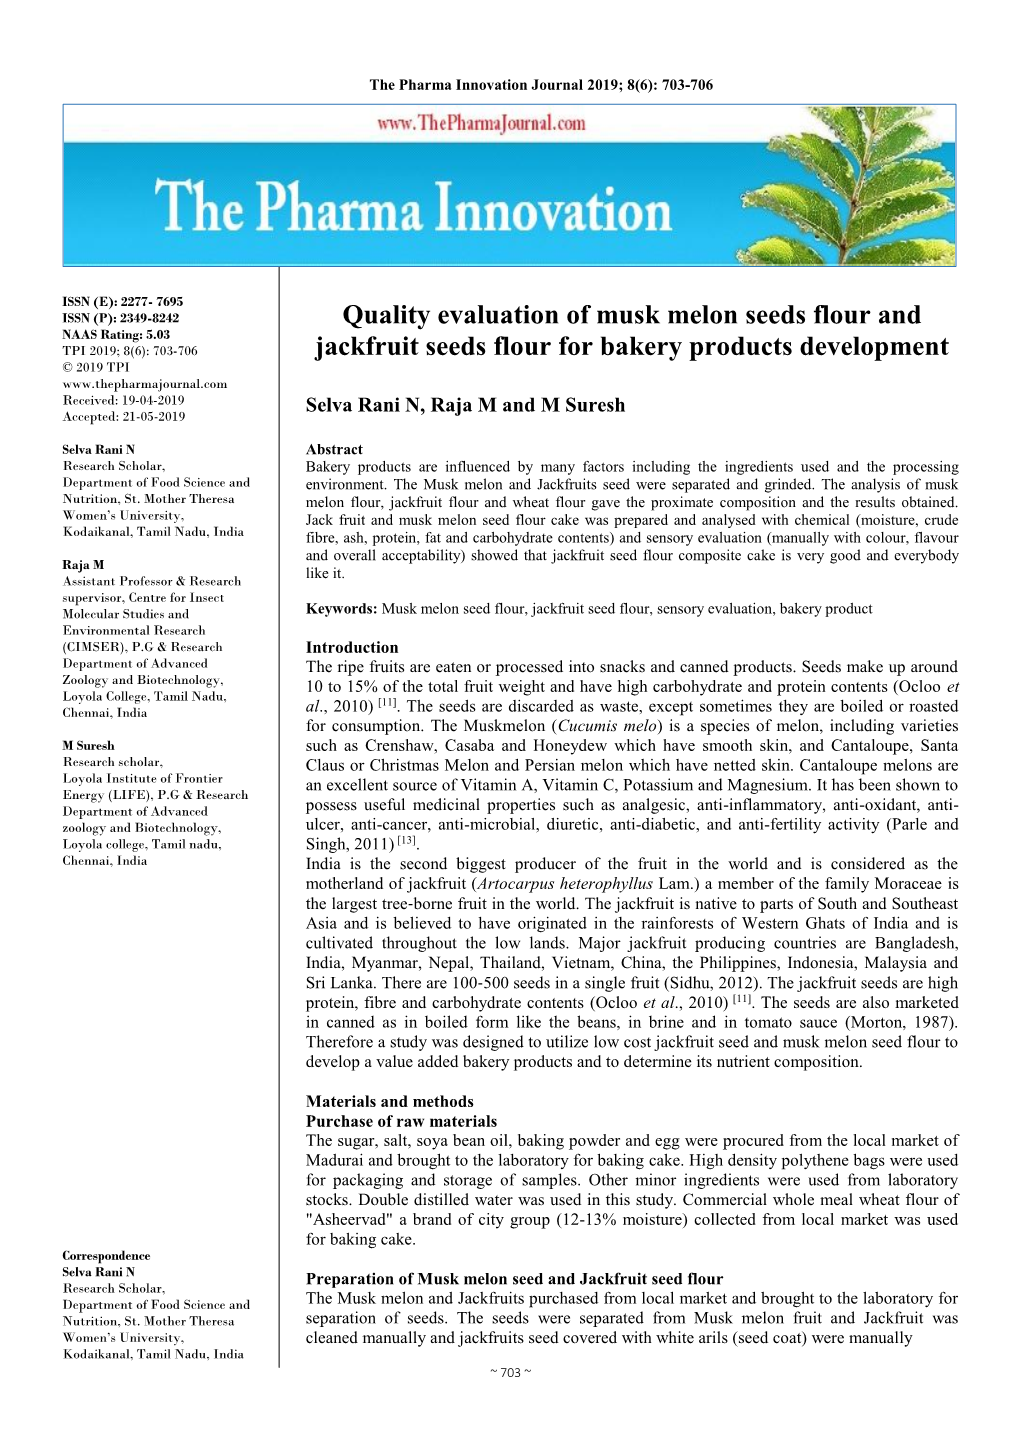 Quality Evaluation of Musk Melon Seeds Flour and Jackfruit Seeds Flour